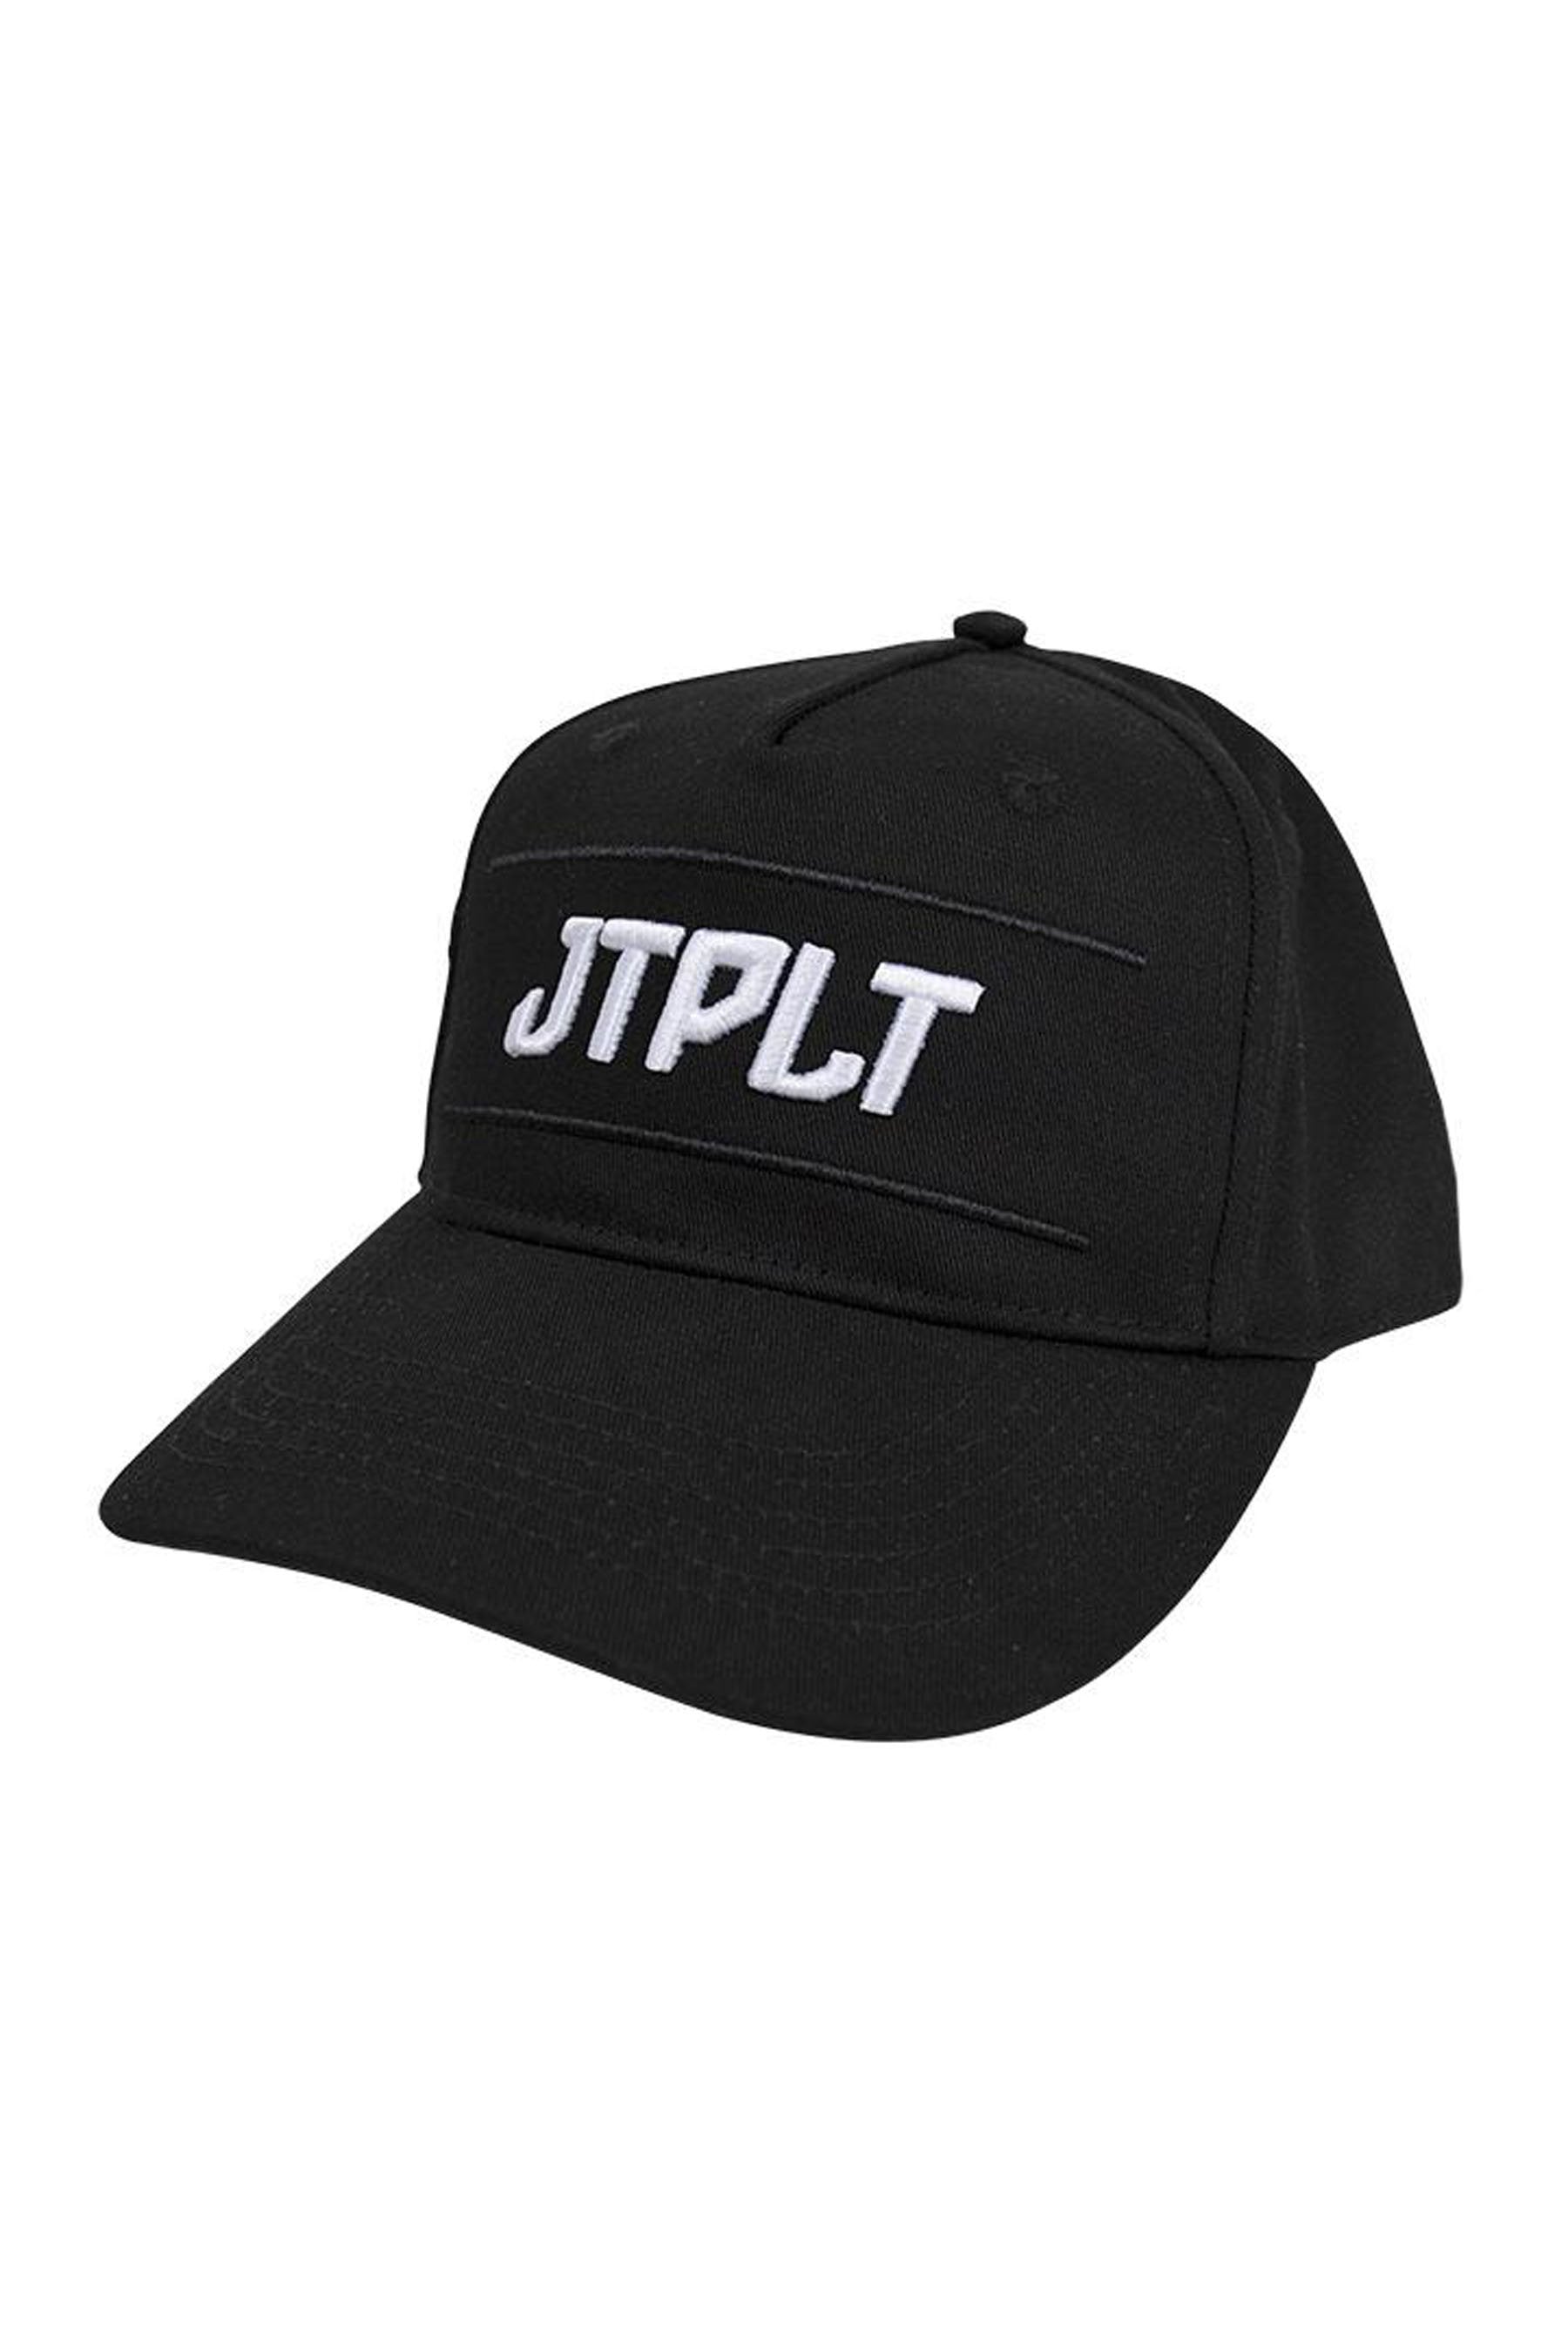 JETPILOT RX YOUTH CAP BLACK